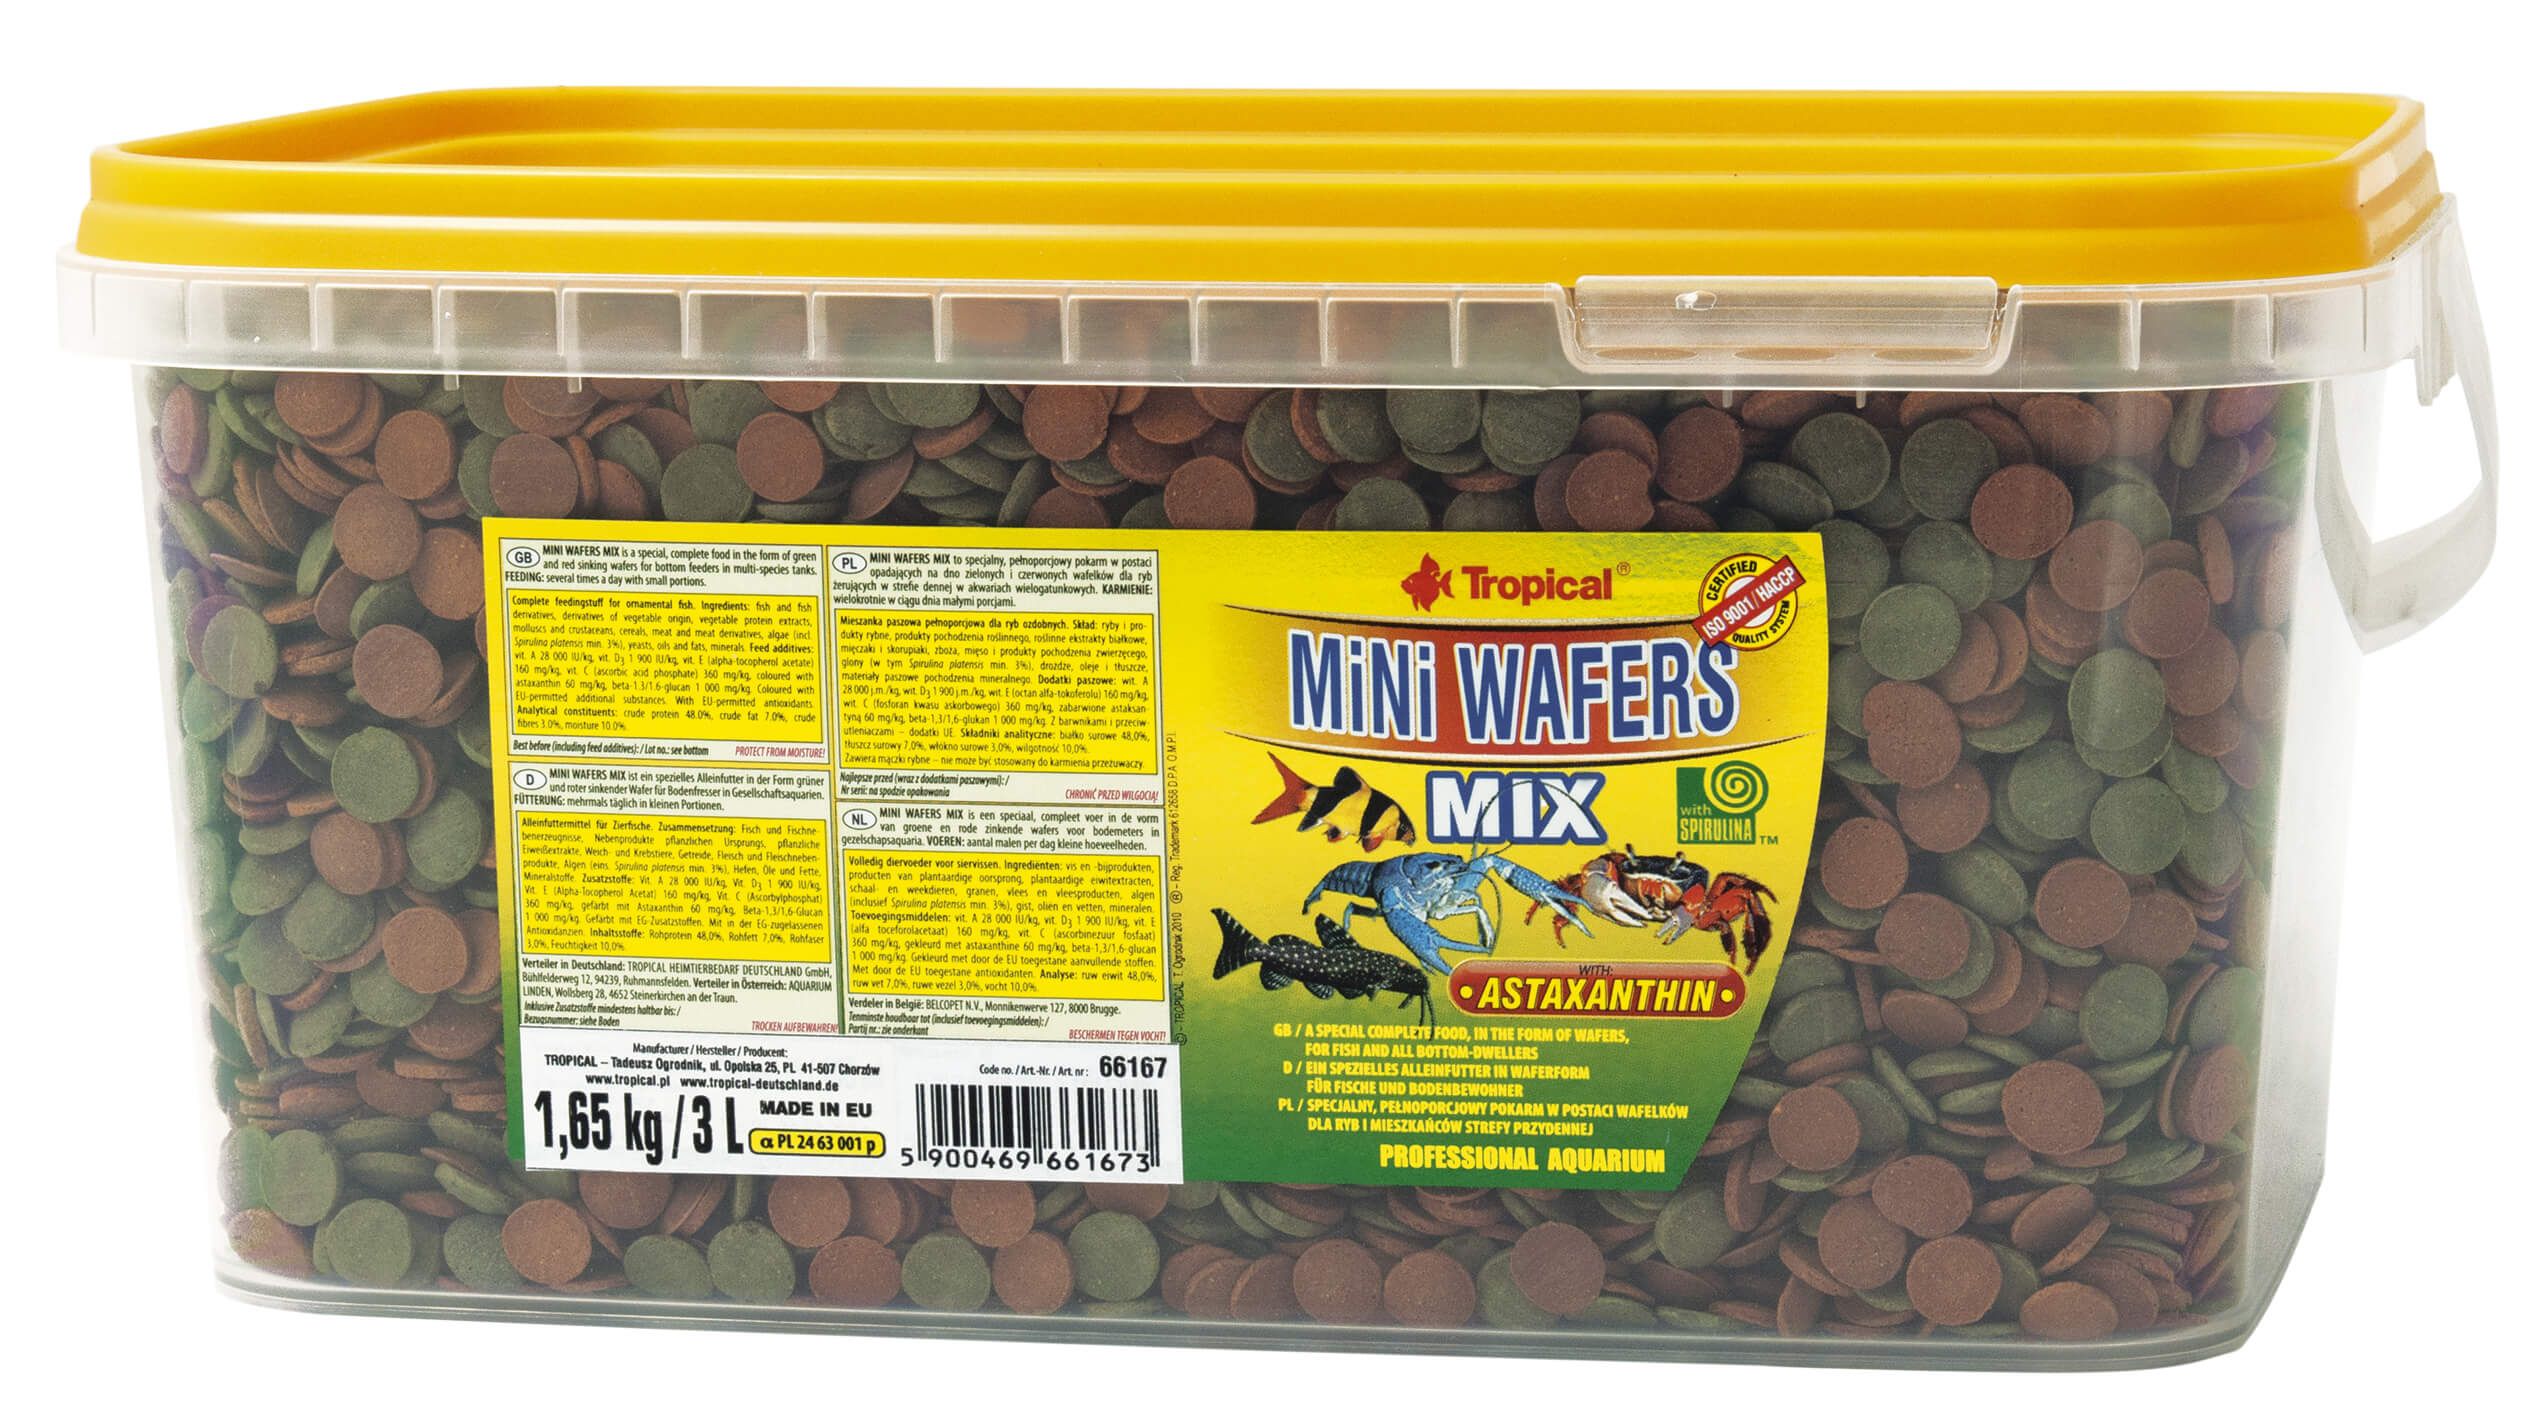 Mini-Wafers MIX